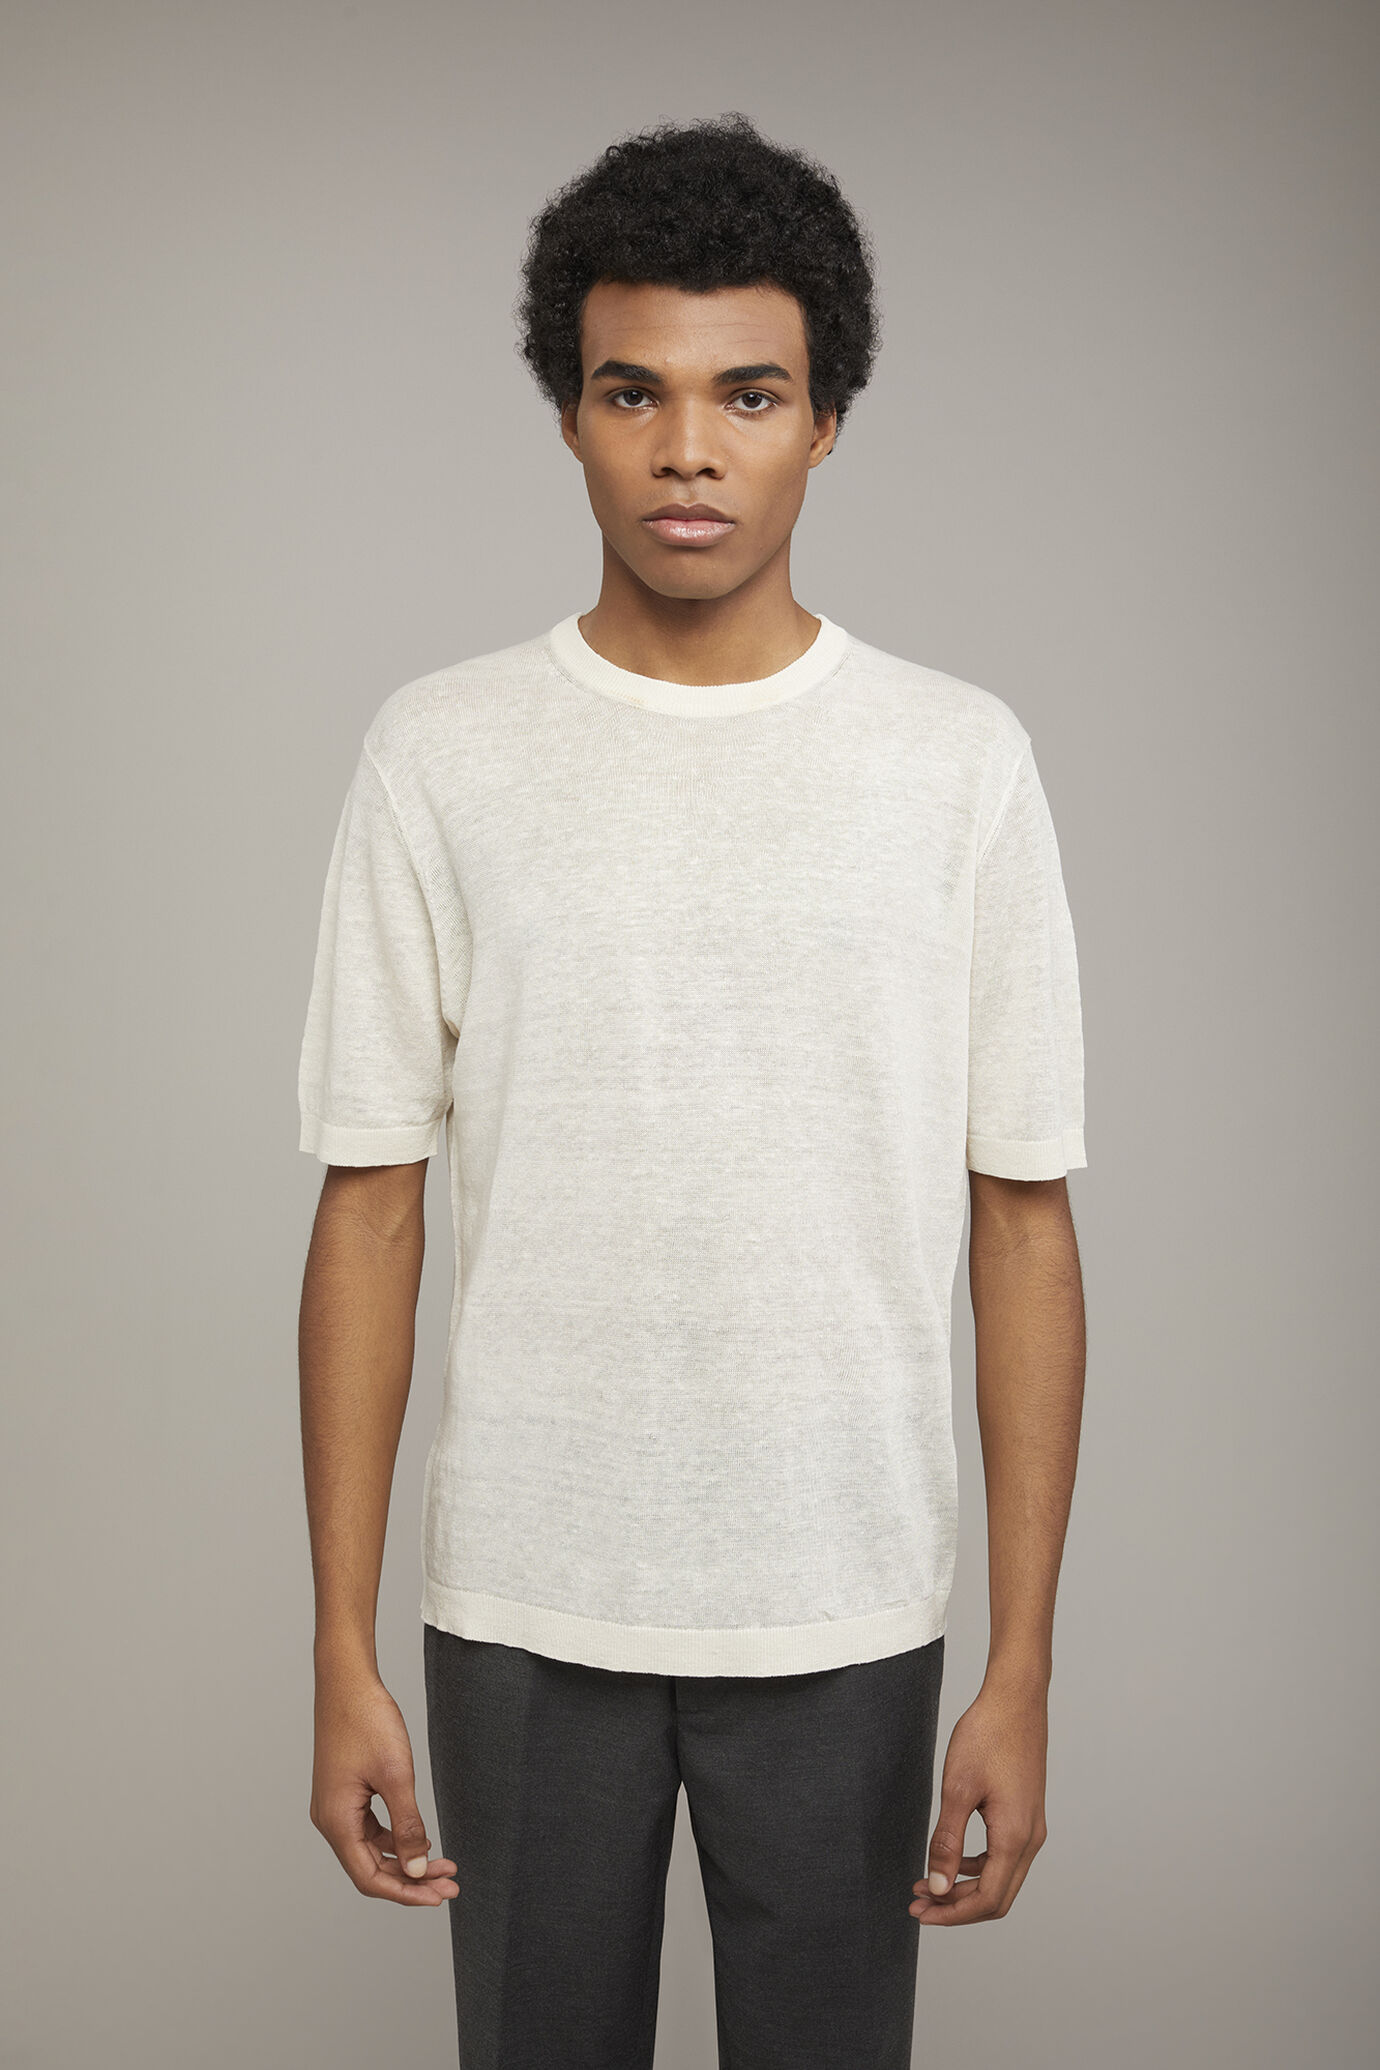 Men's knitted t-shirt 100% linen short-sleeved regular fit image number 2